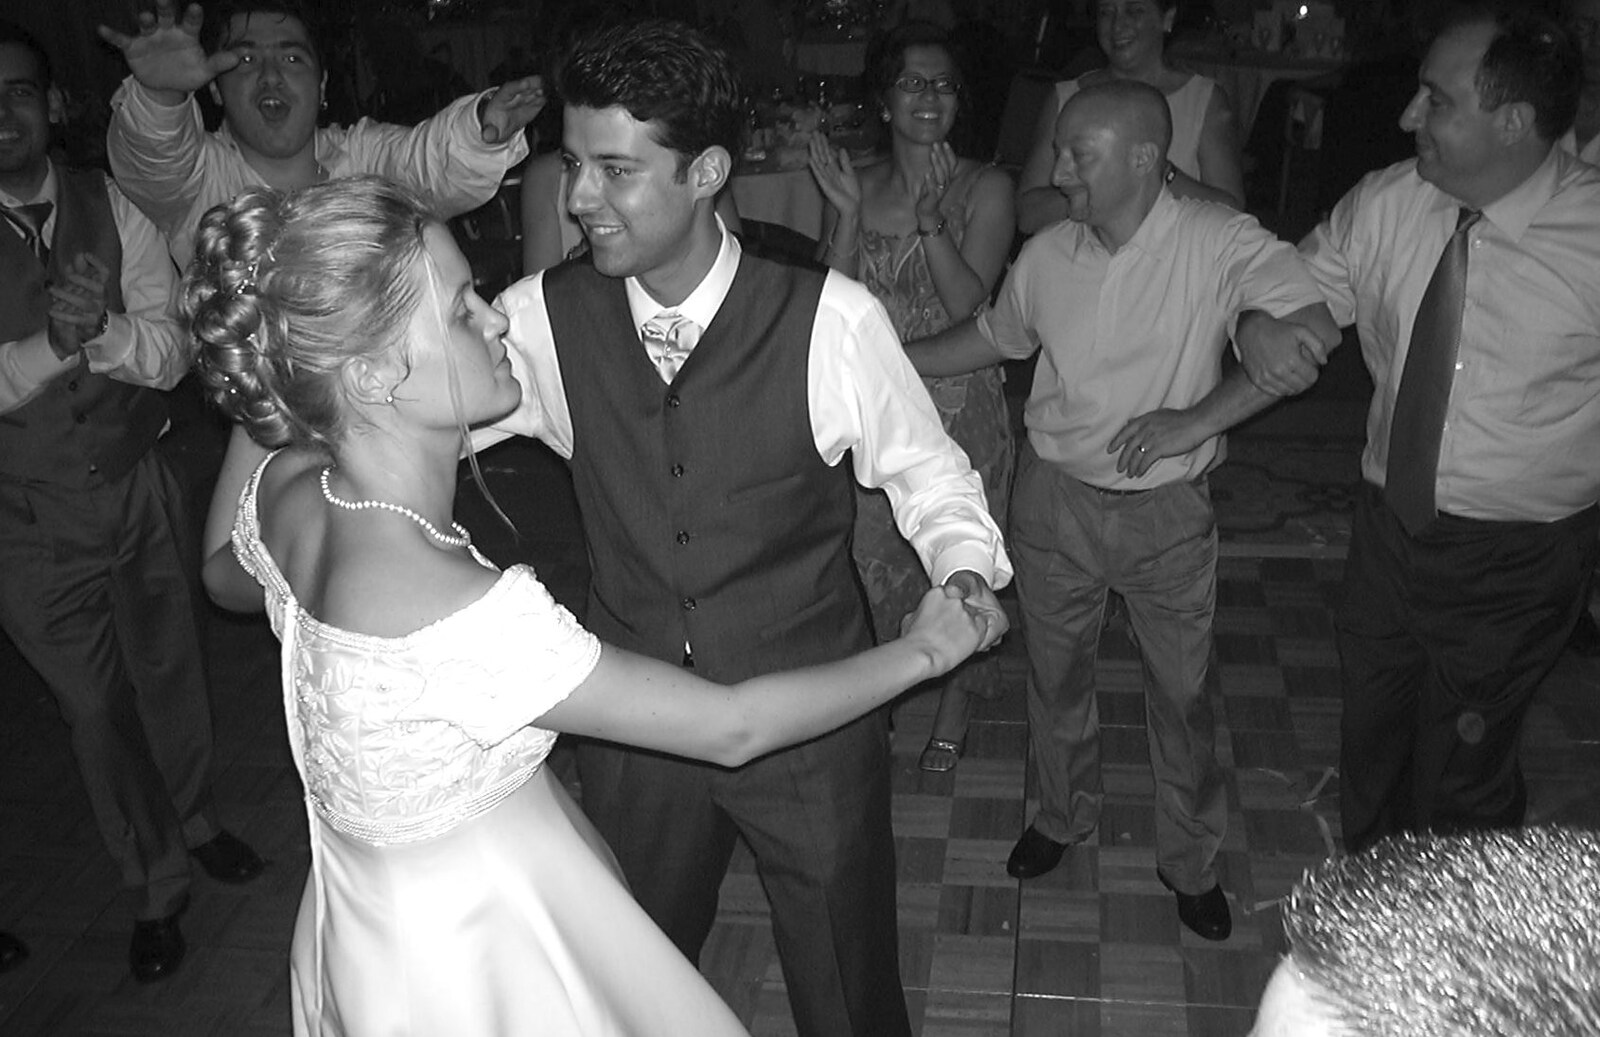 Some wedding dancing from Elisa and Luigi's Wedding, Carouge, Geneva, Switzerland - 20th July 2001